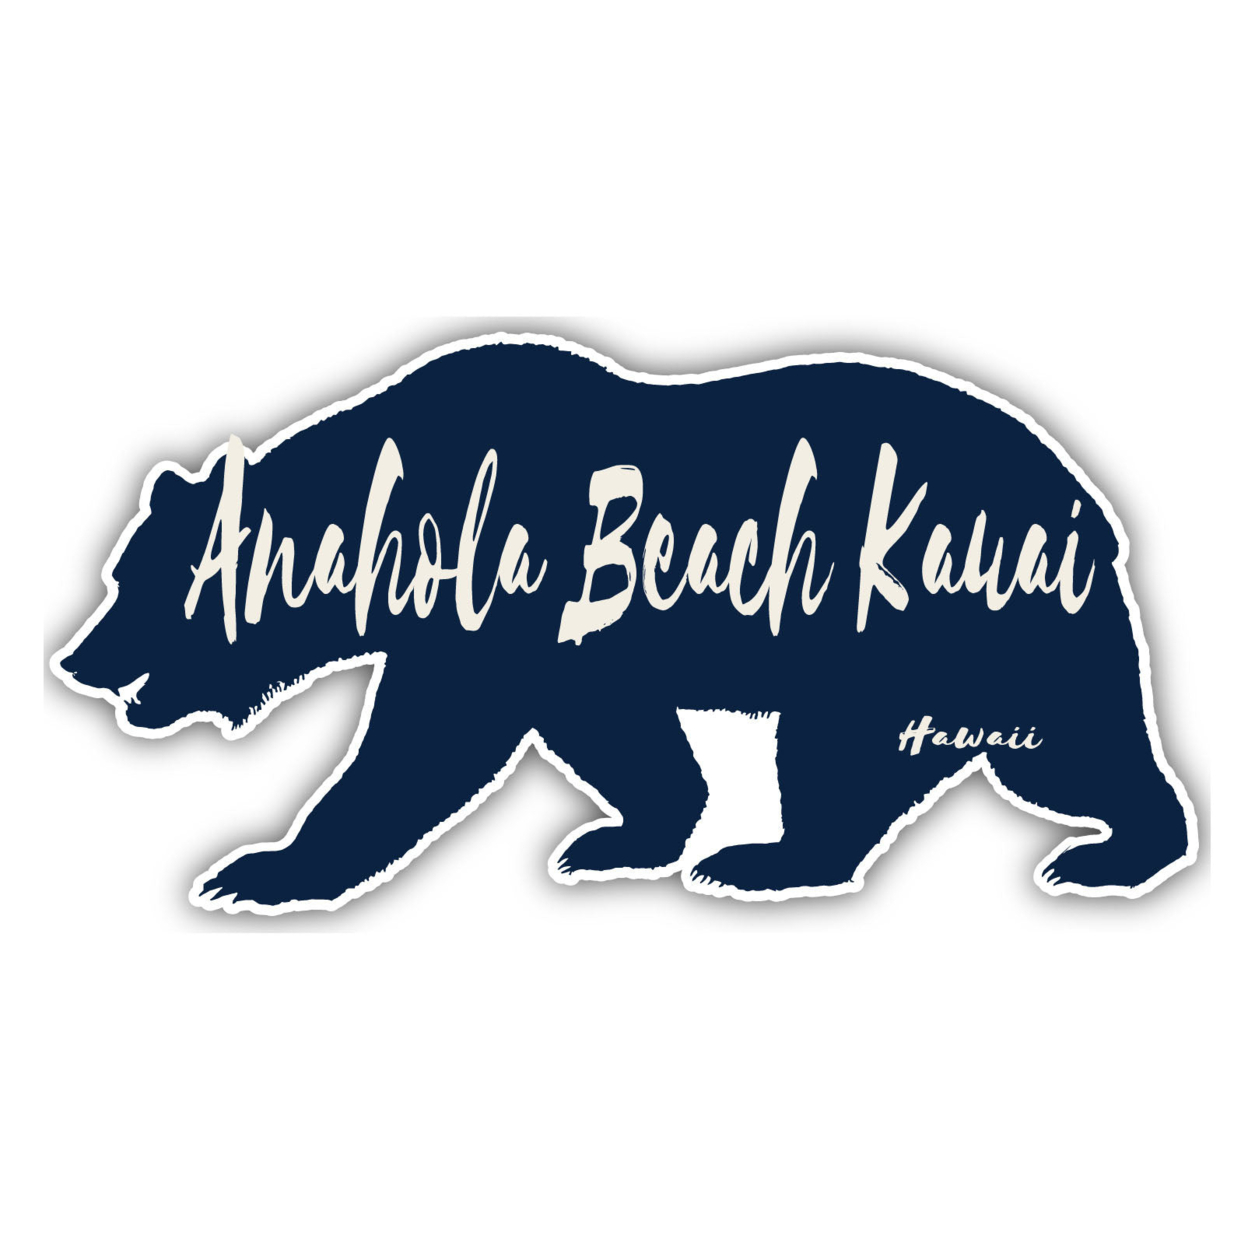 Anahola Beach Kauai Hawaii Souvenir Decorative Stickers (Choose Theme And Size) - Single Unit, 2-Inch, Bear